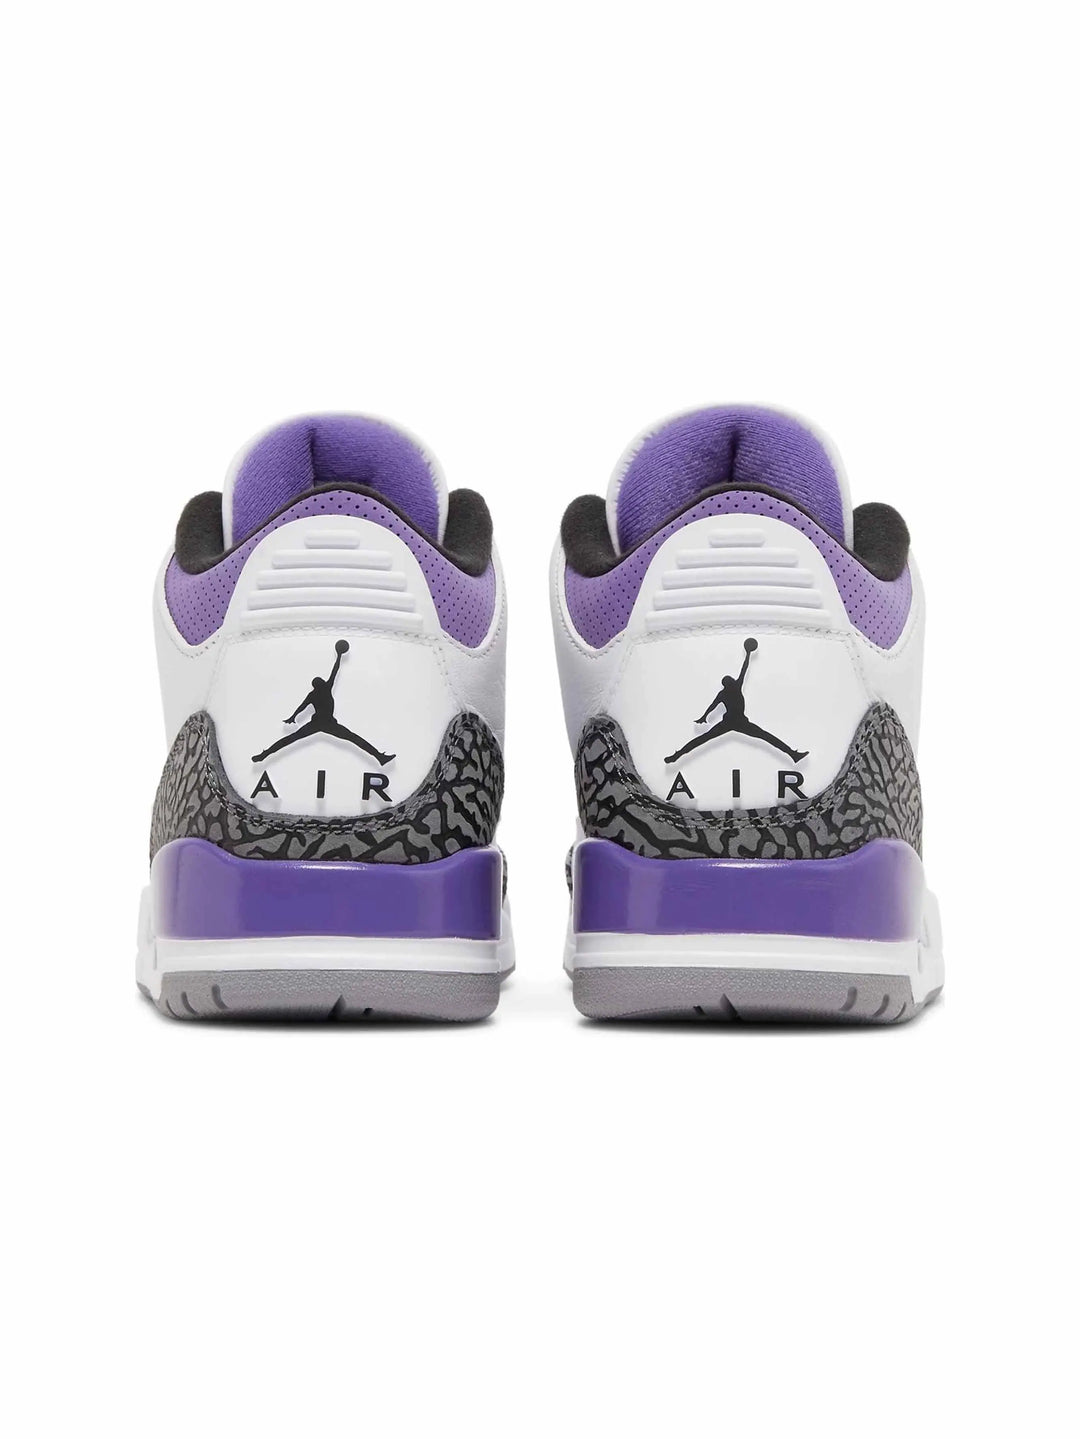 Nike Air Jordan 3 Retro Dark Iris - Prior